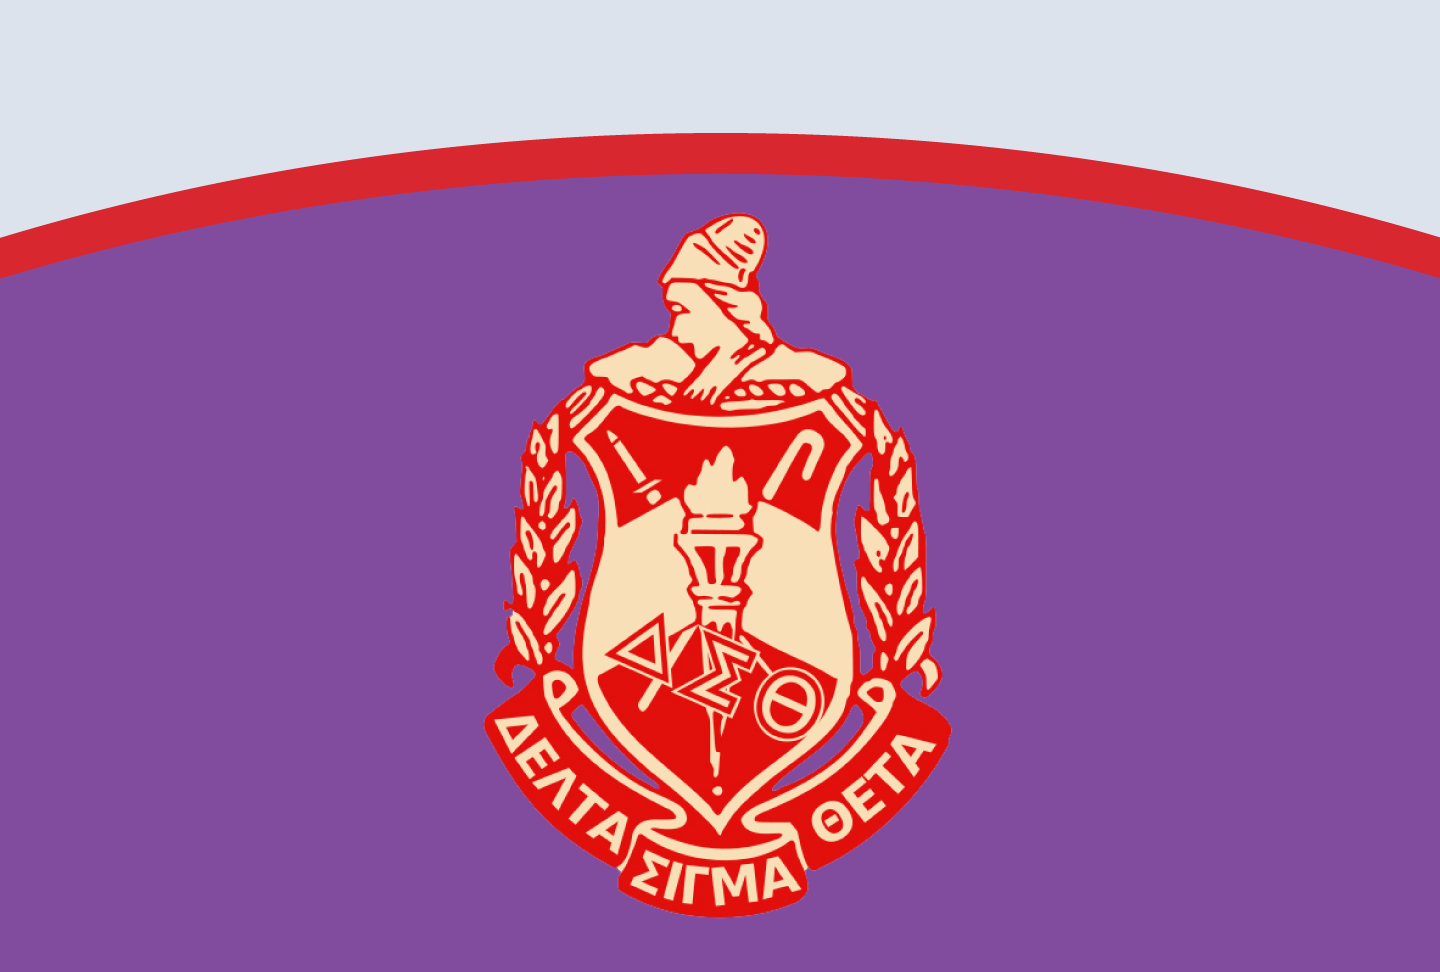 Delta Sigma Theta logo.